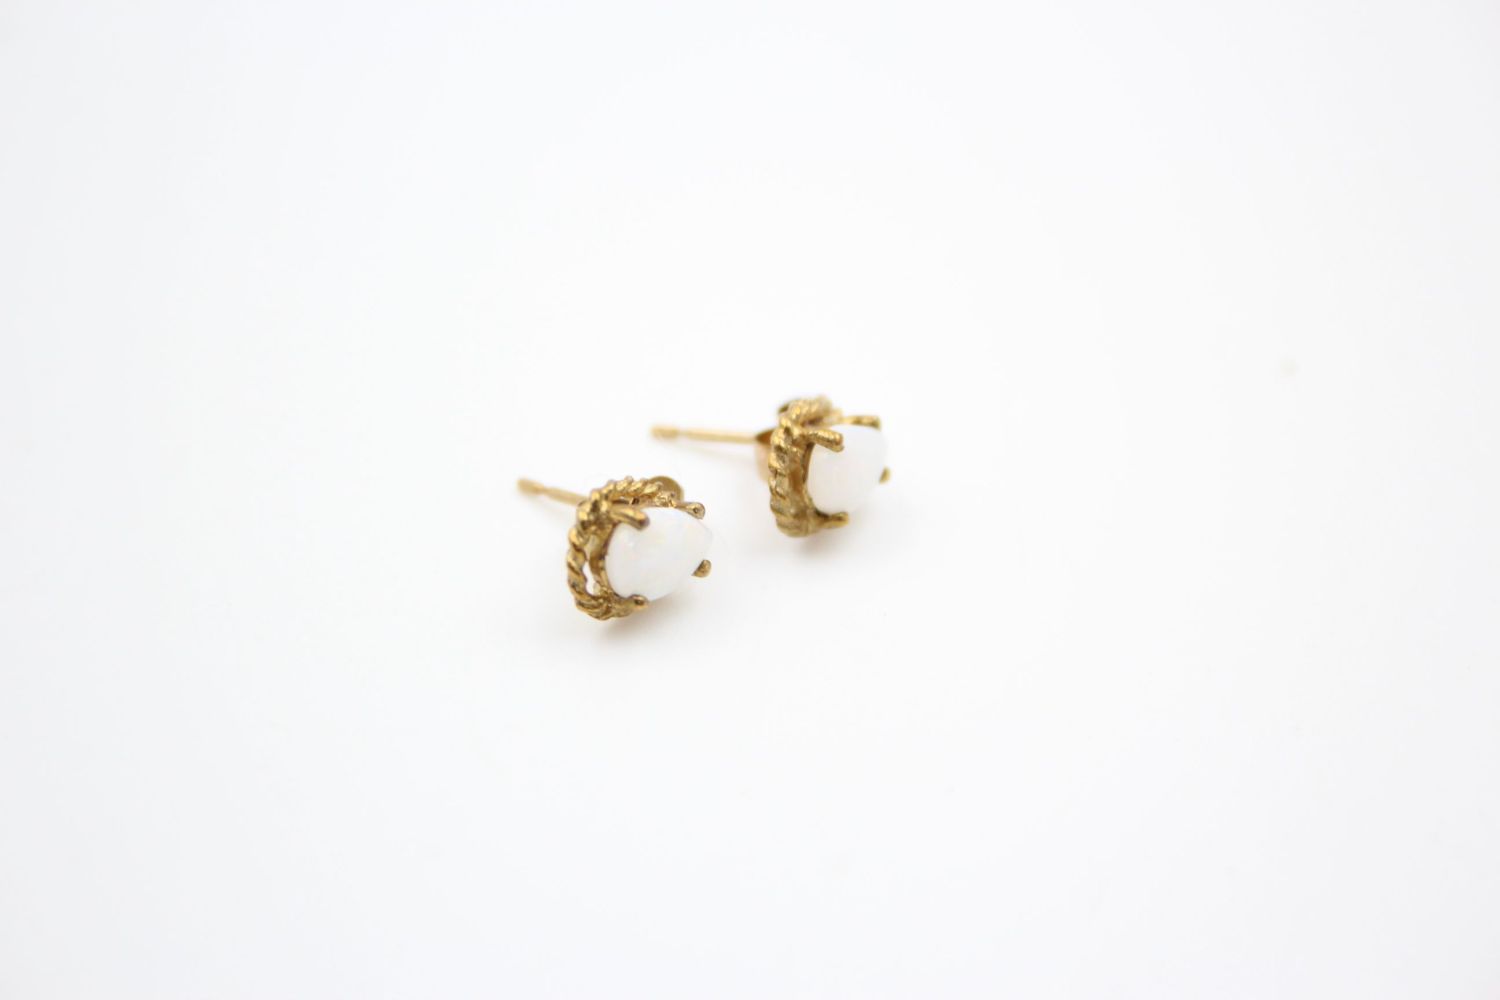 3 x 9ct gold gemstone earrings 1.9 grams gross - Image 3 of 11